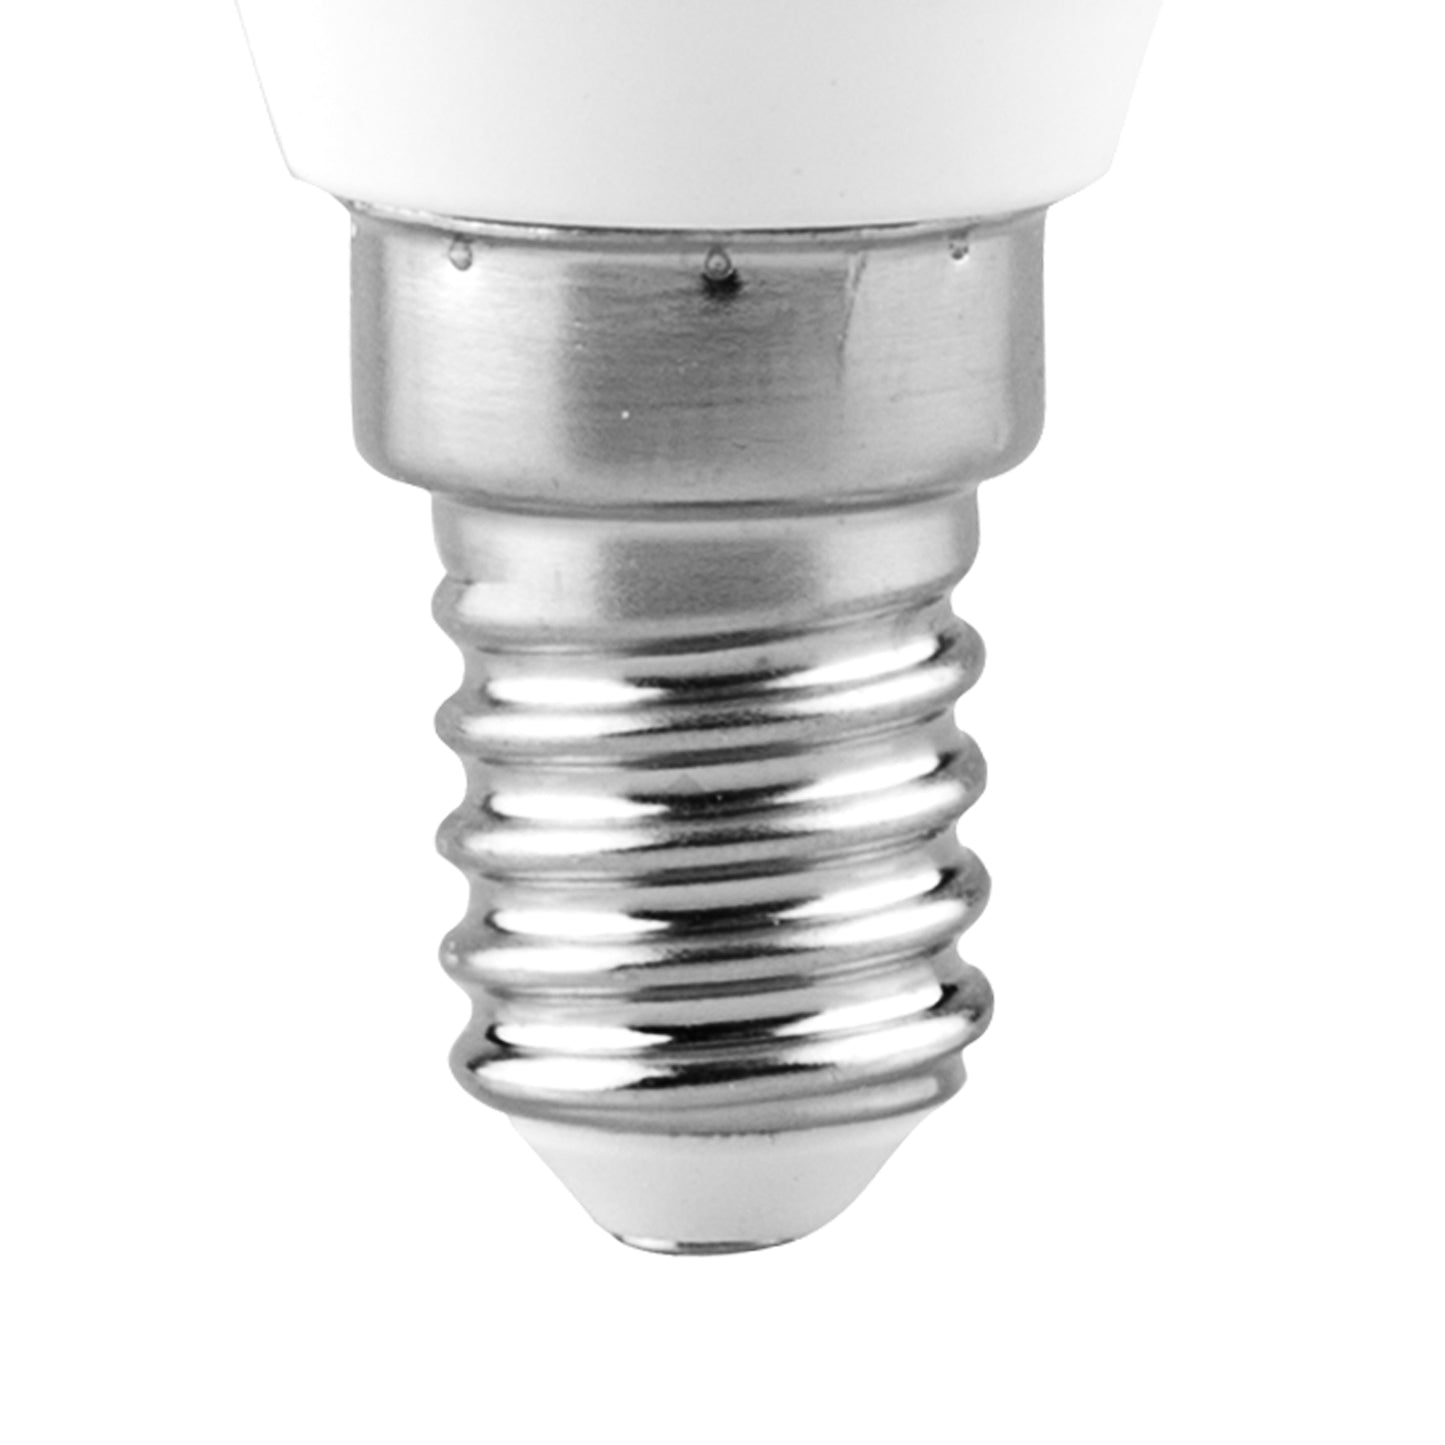 LED REFLECTOR LAMP SAMSUNG E14 R50 6W